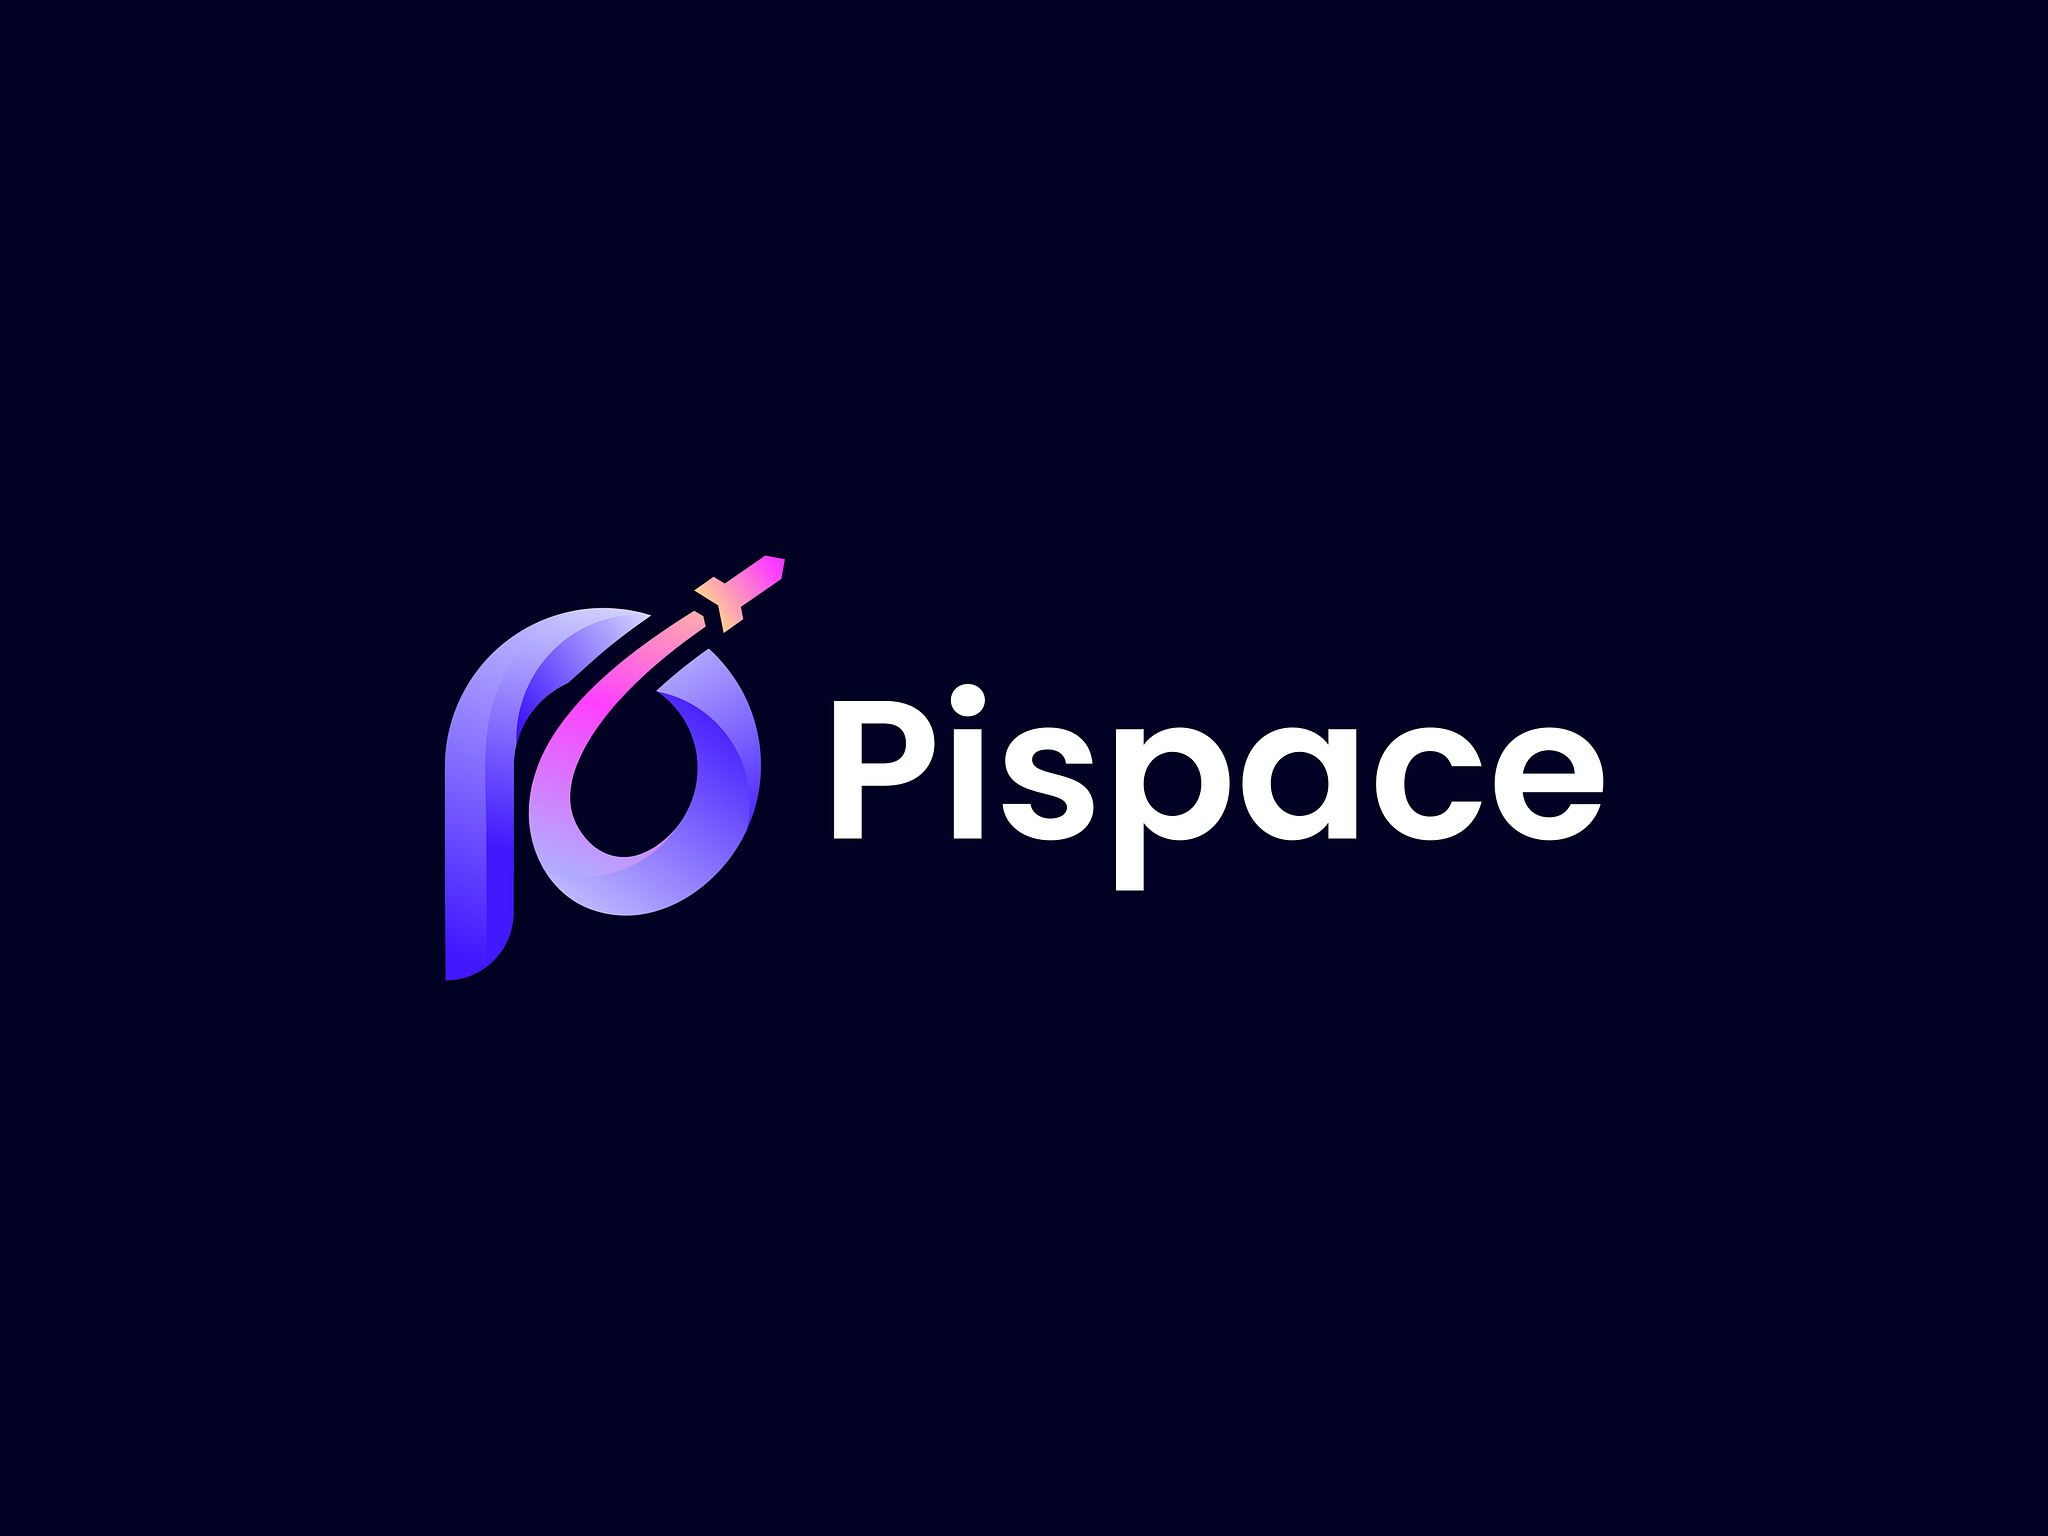 Pispace Logo by Dipankar Debnath on Dribbble